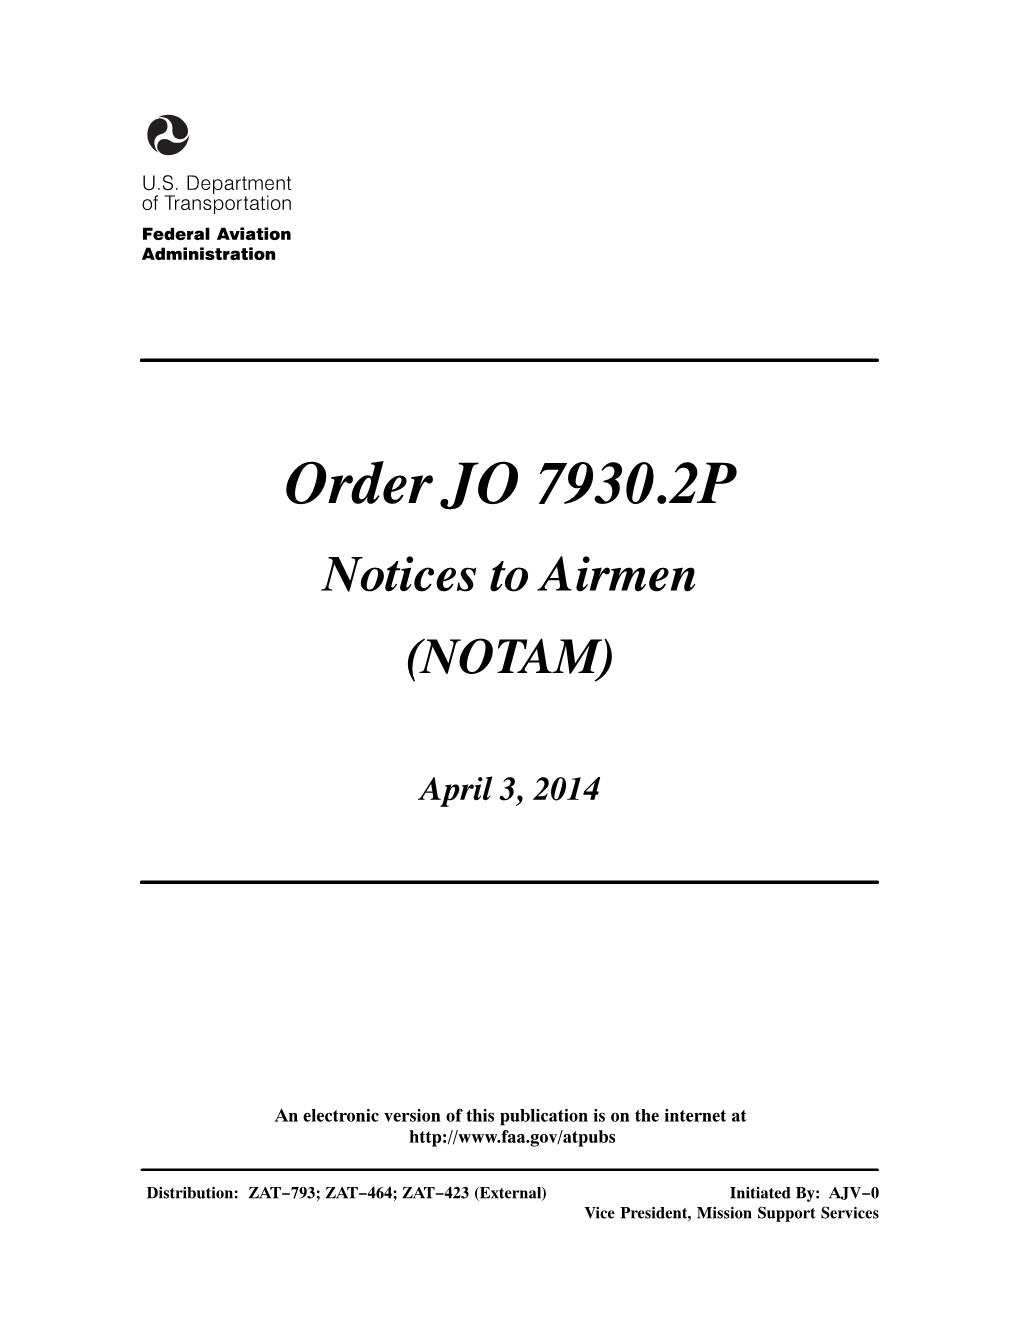 Order JO 7930.2P Notices to Airmen (NOTAM)